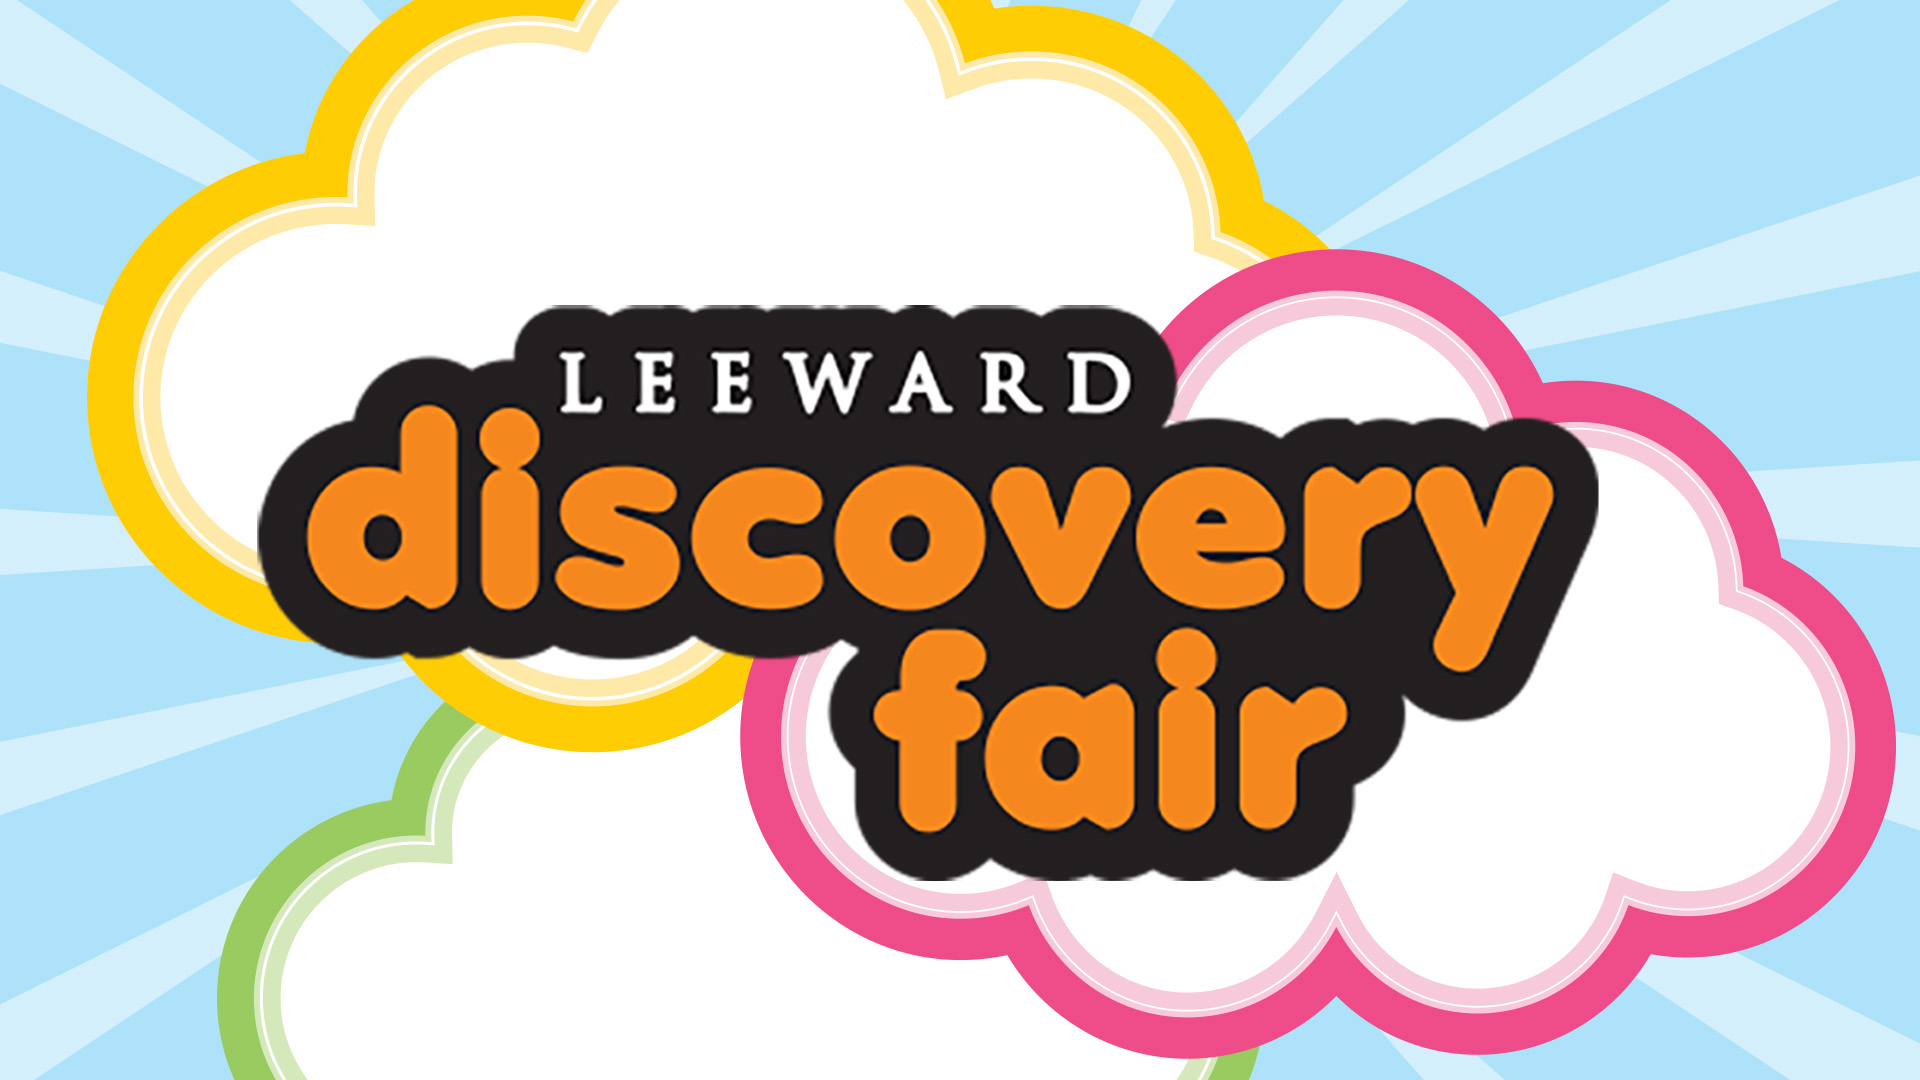 Leeward Discovery Fair